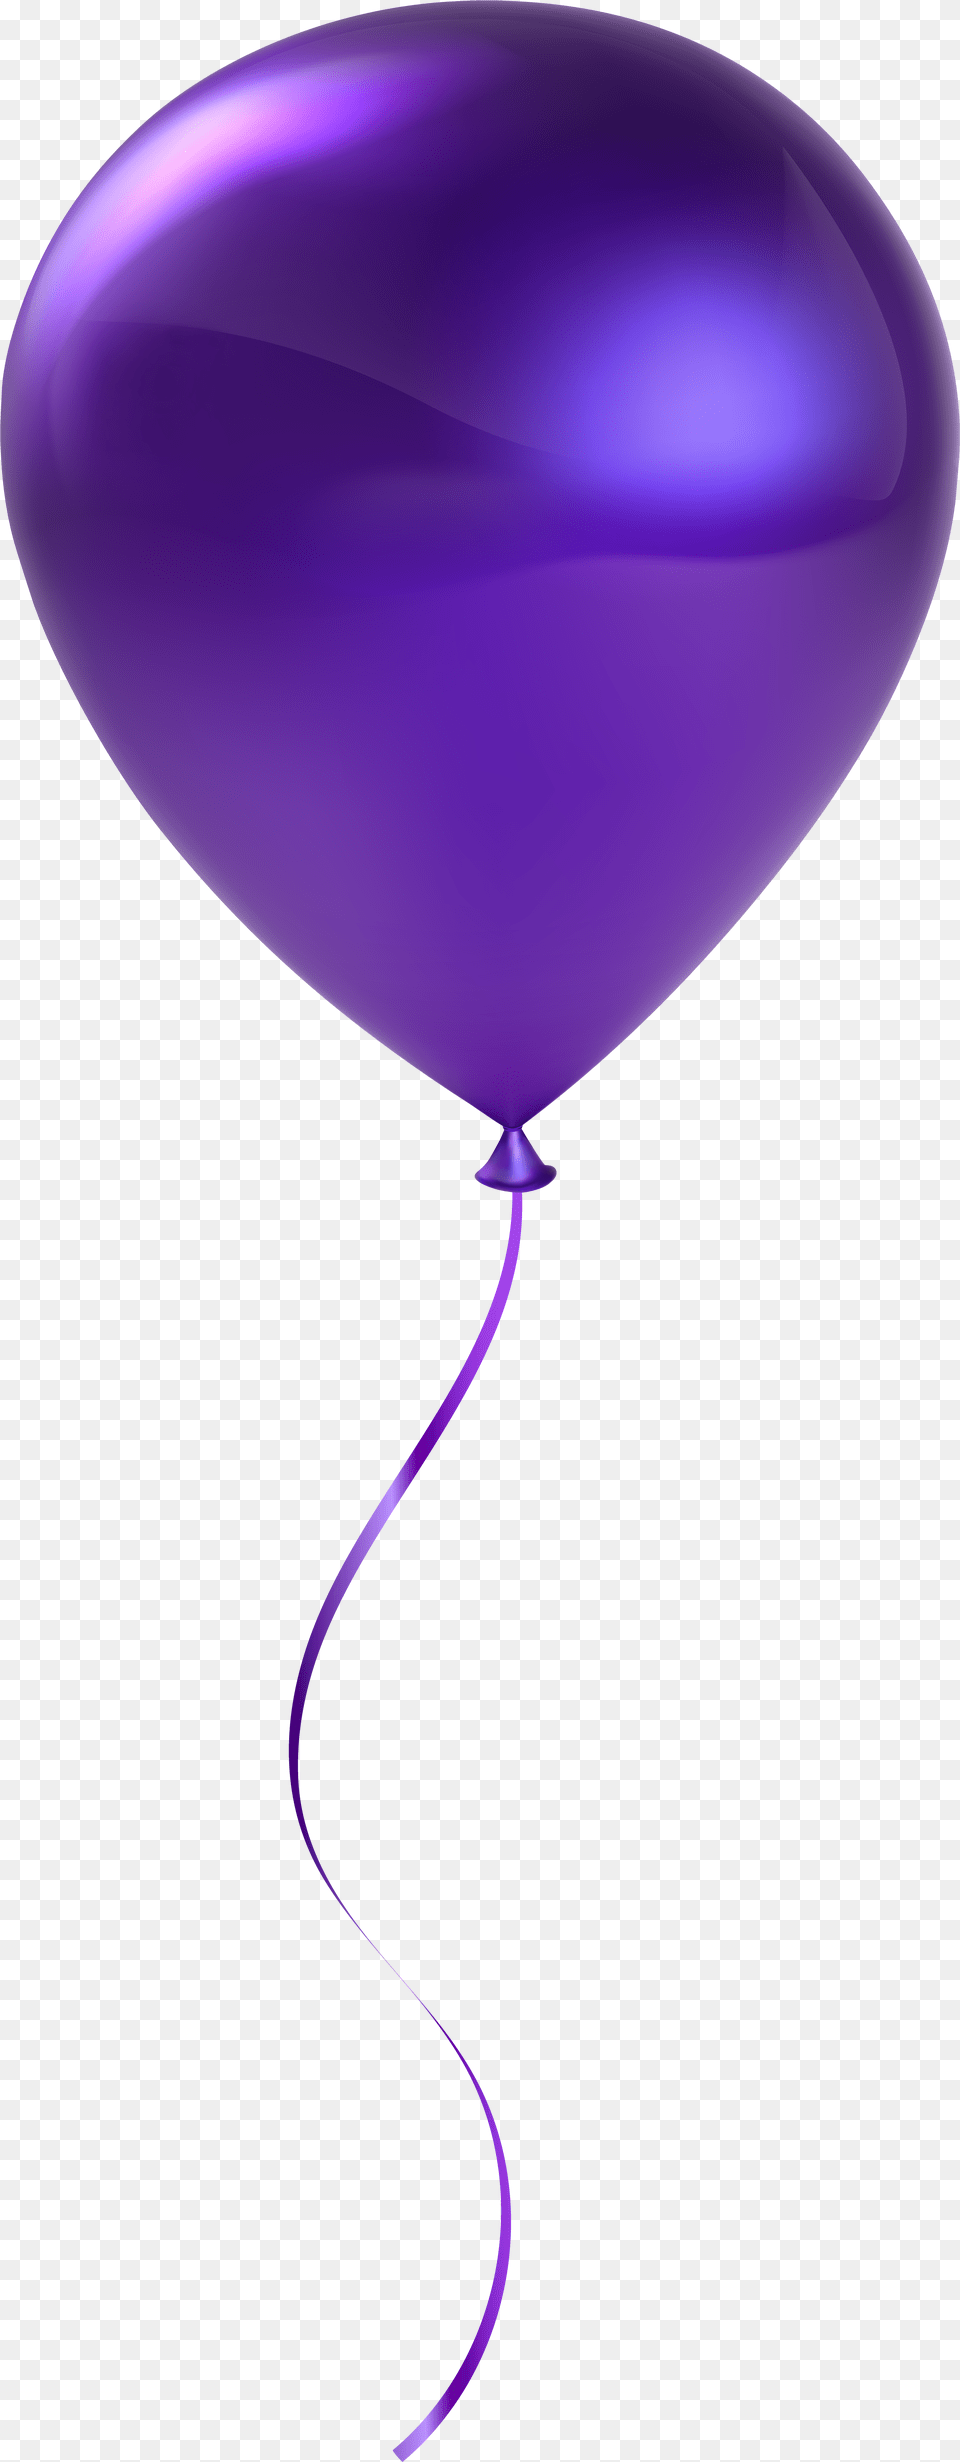 Single Purple Balloon Clip Artu200b Gallery Single Background Balloon Clipart Png